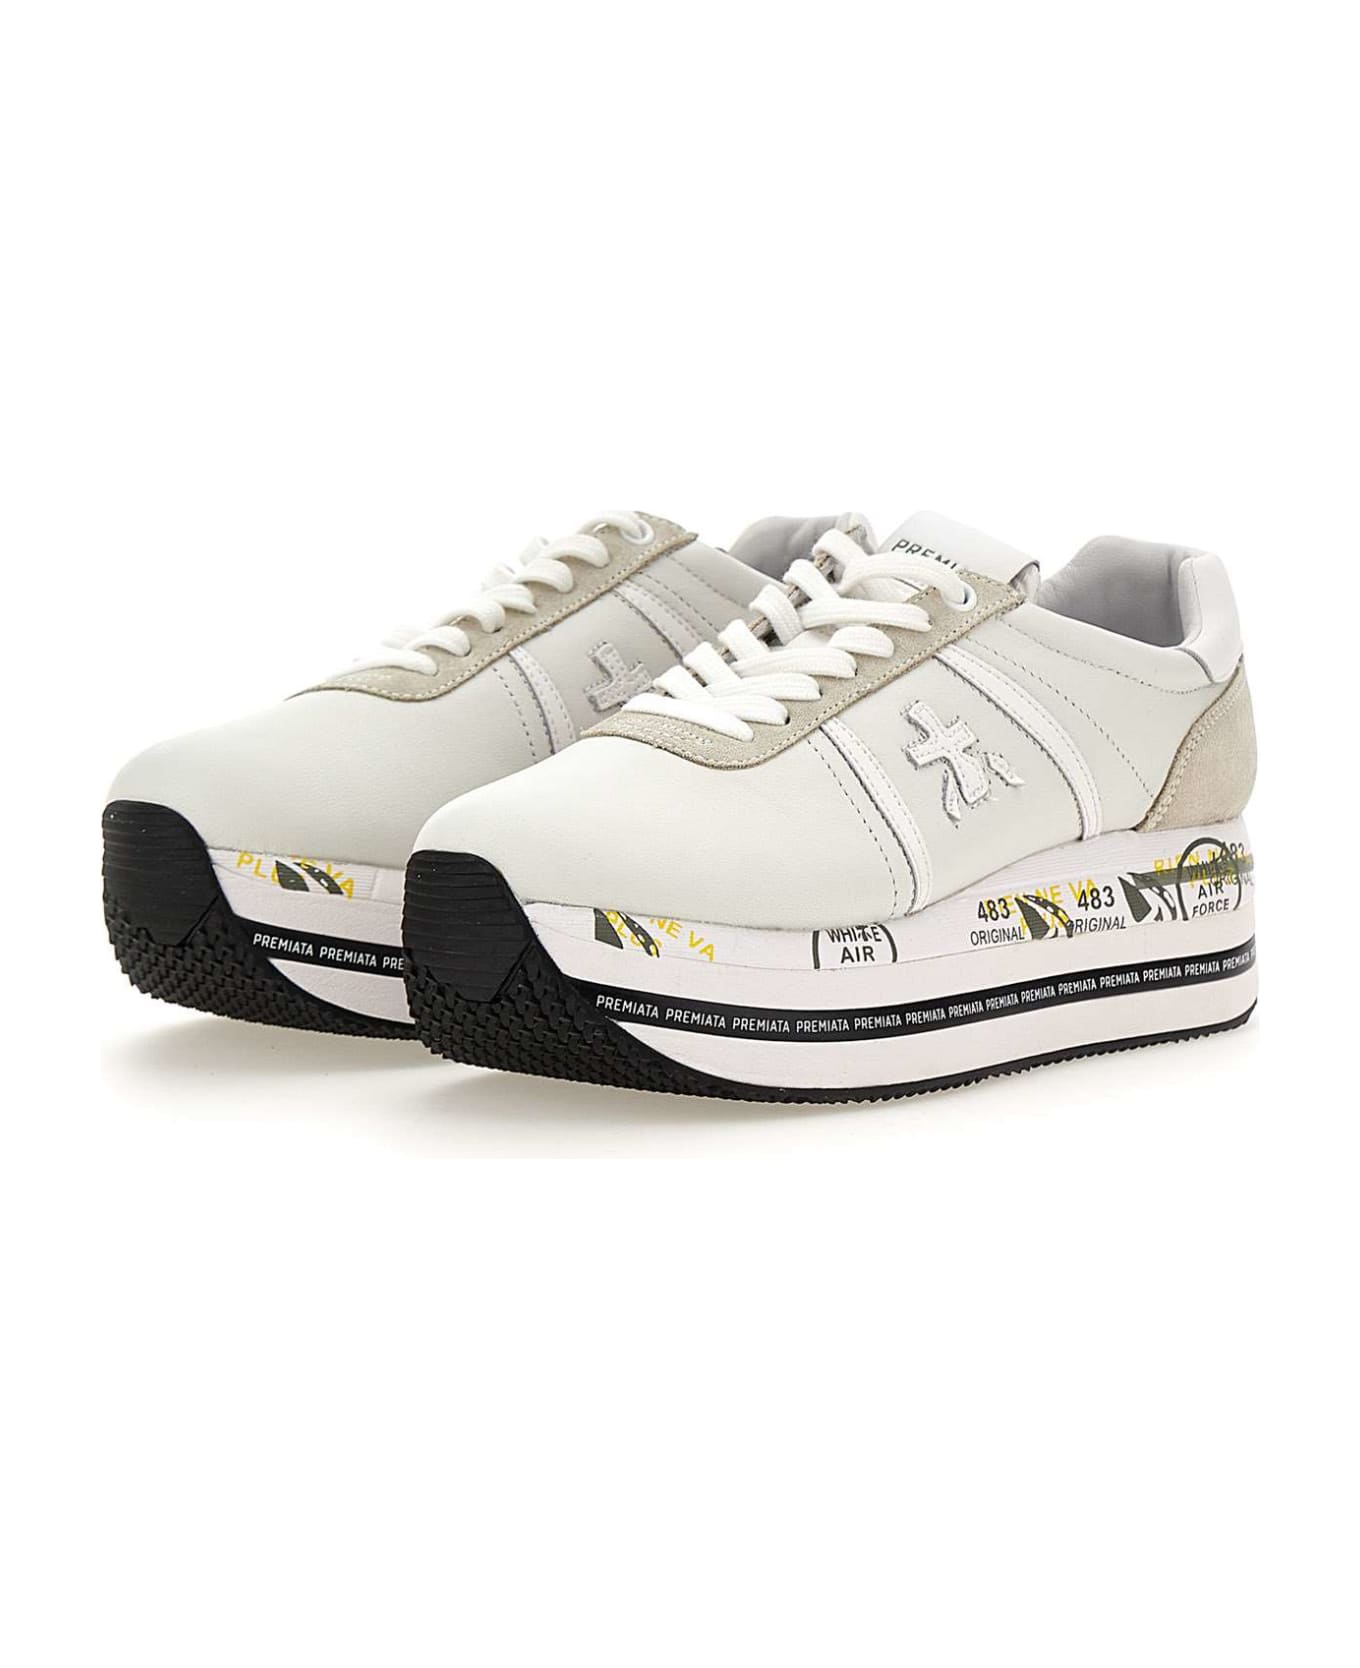 Premiata "beth 5603" Sneakers - WHITE